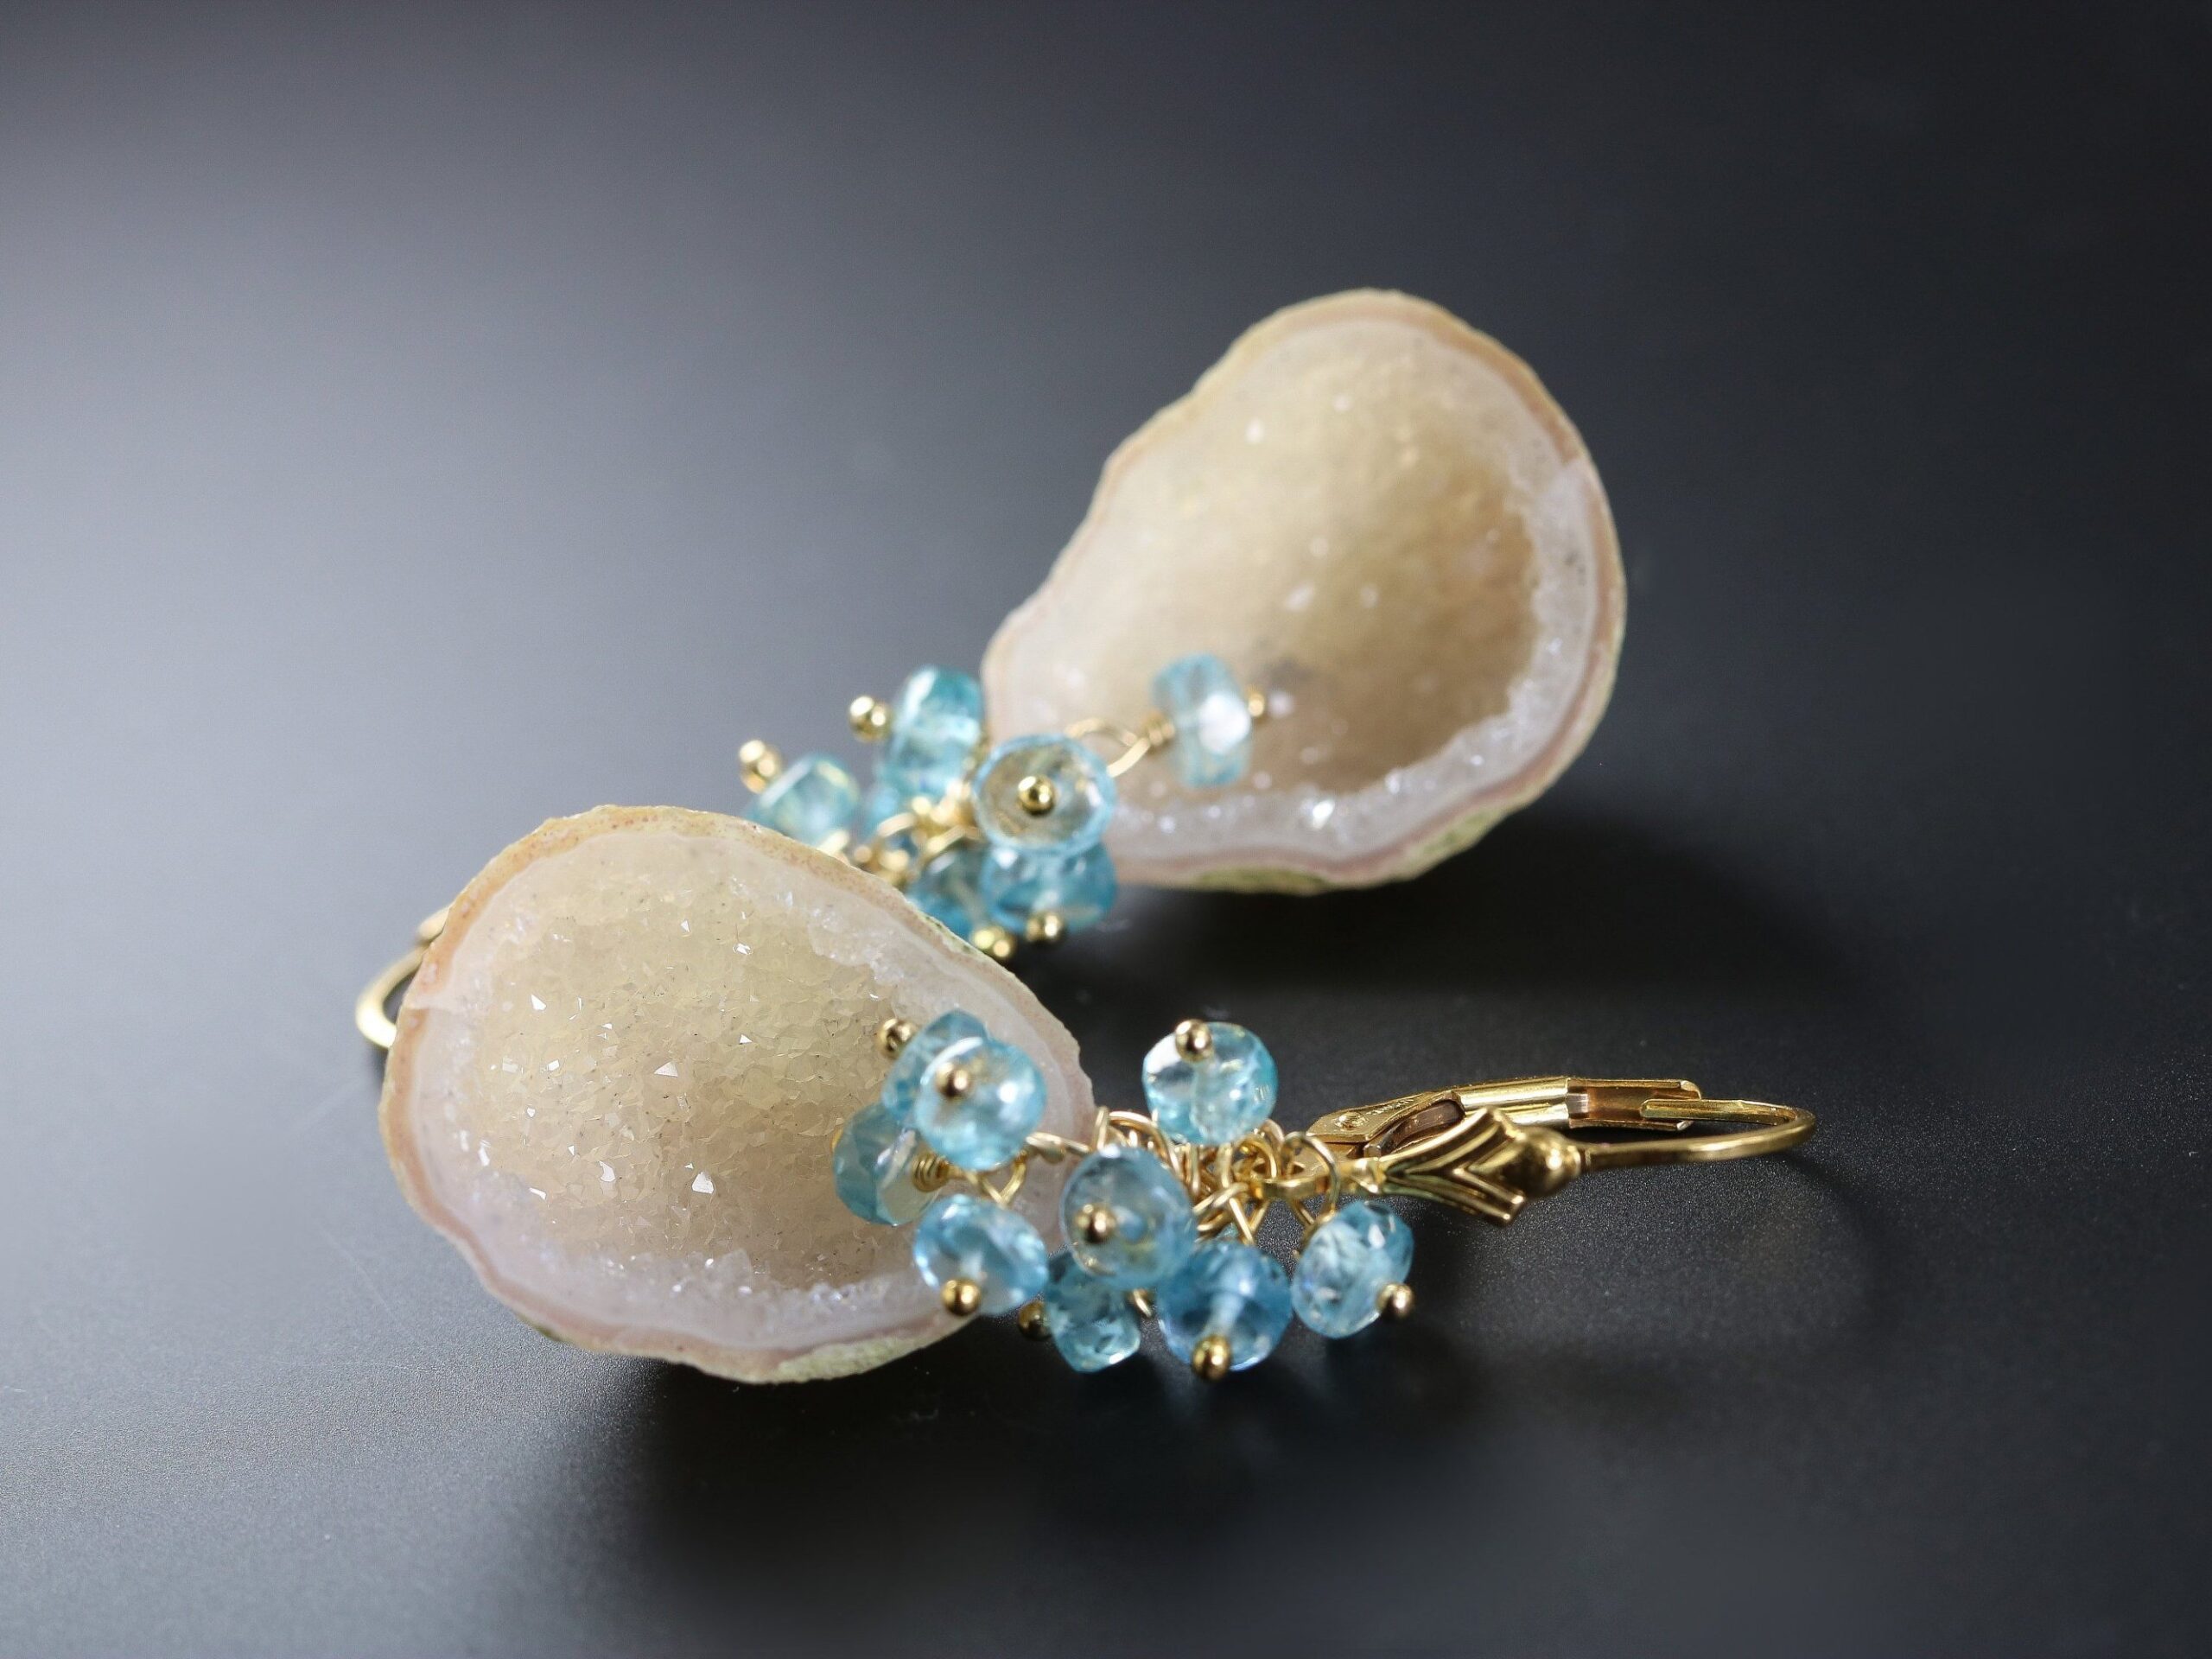 Me-Not Earrings - Cream Mini Geode Tabasco Earrings in 14K Gold Filled, One of a Kind